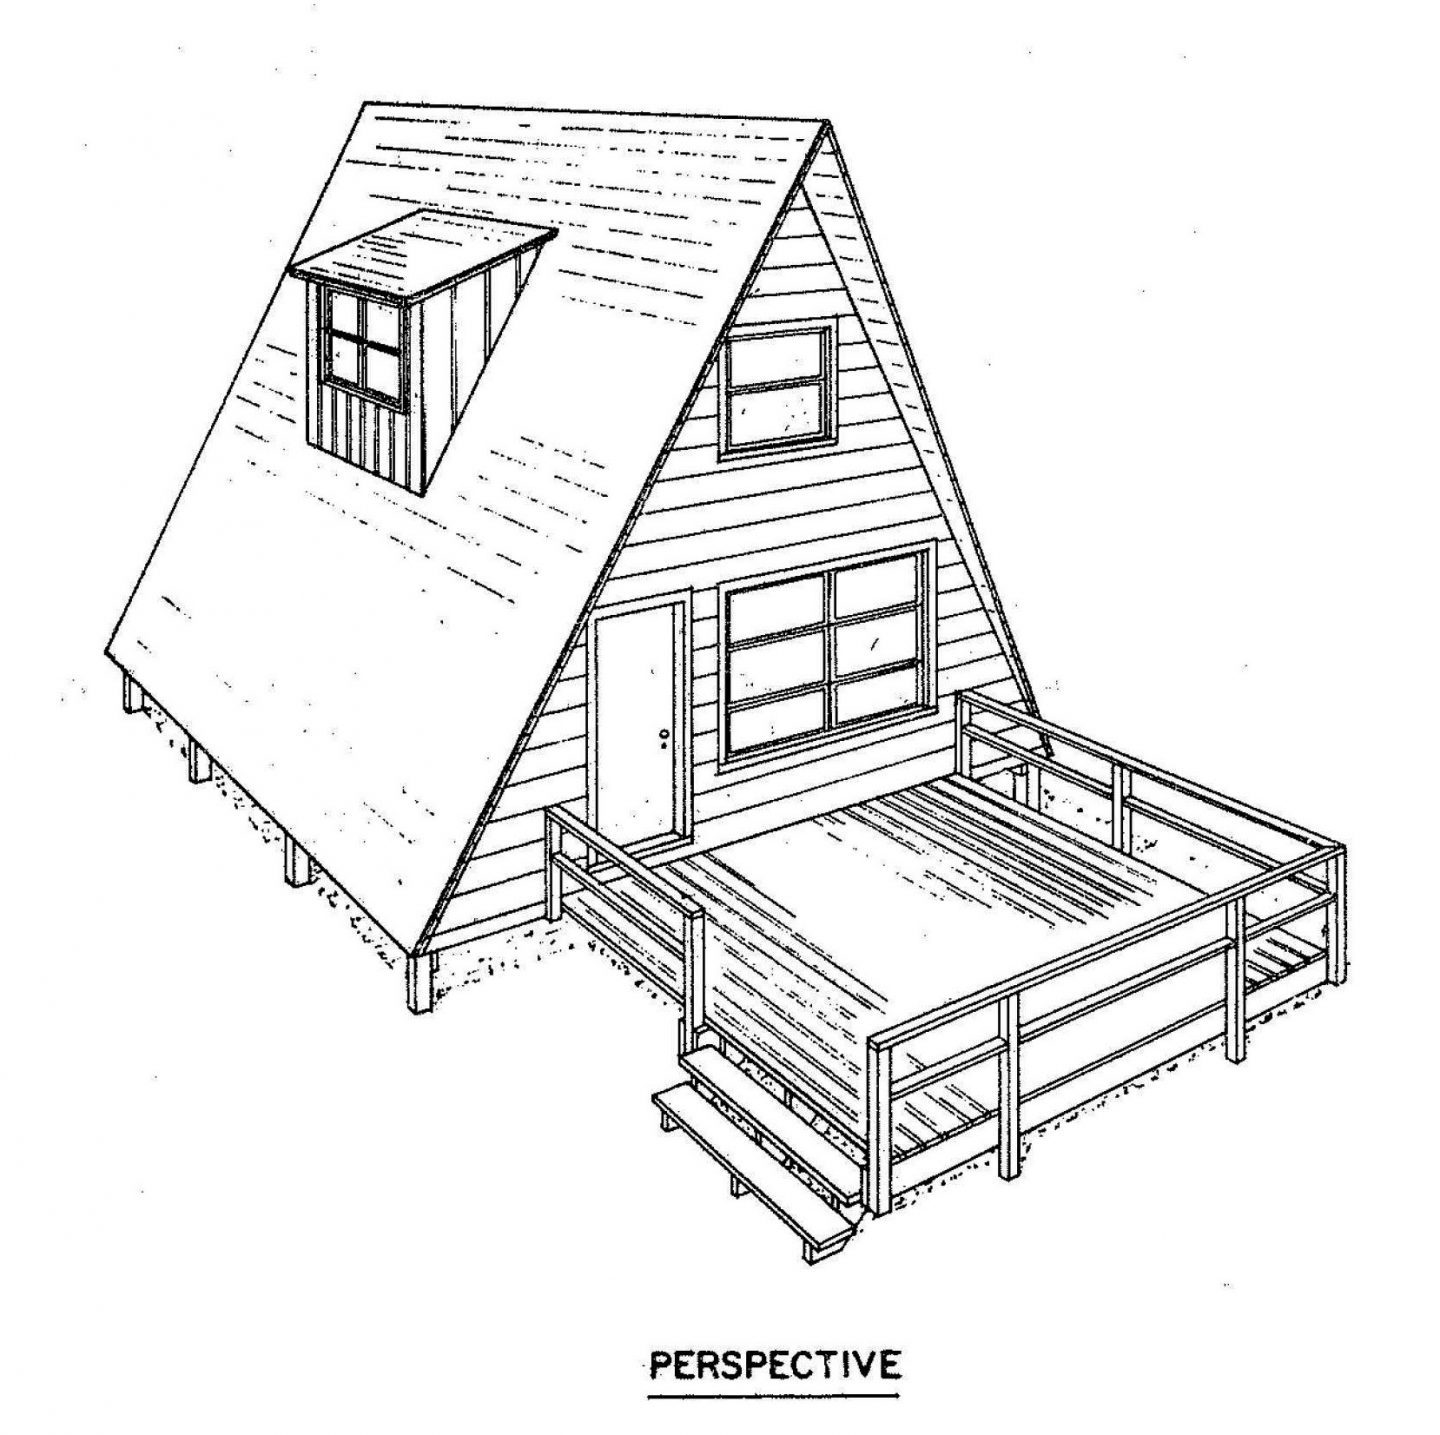 Simple Log Cabin Drawing at GetDrawings | Free download